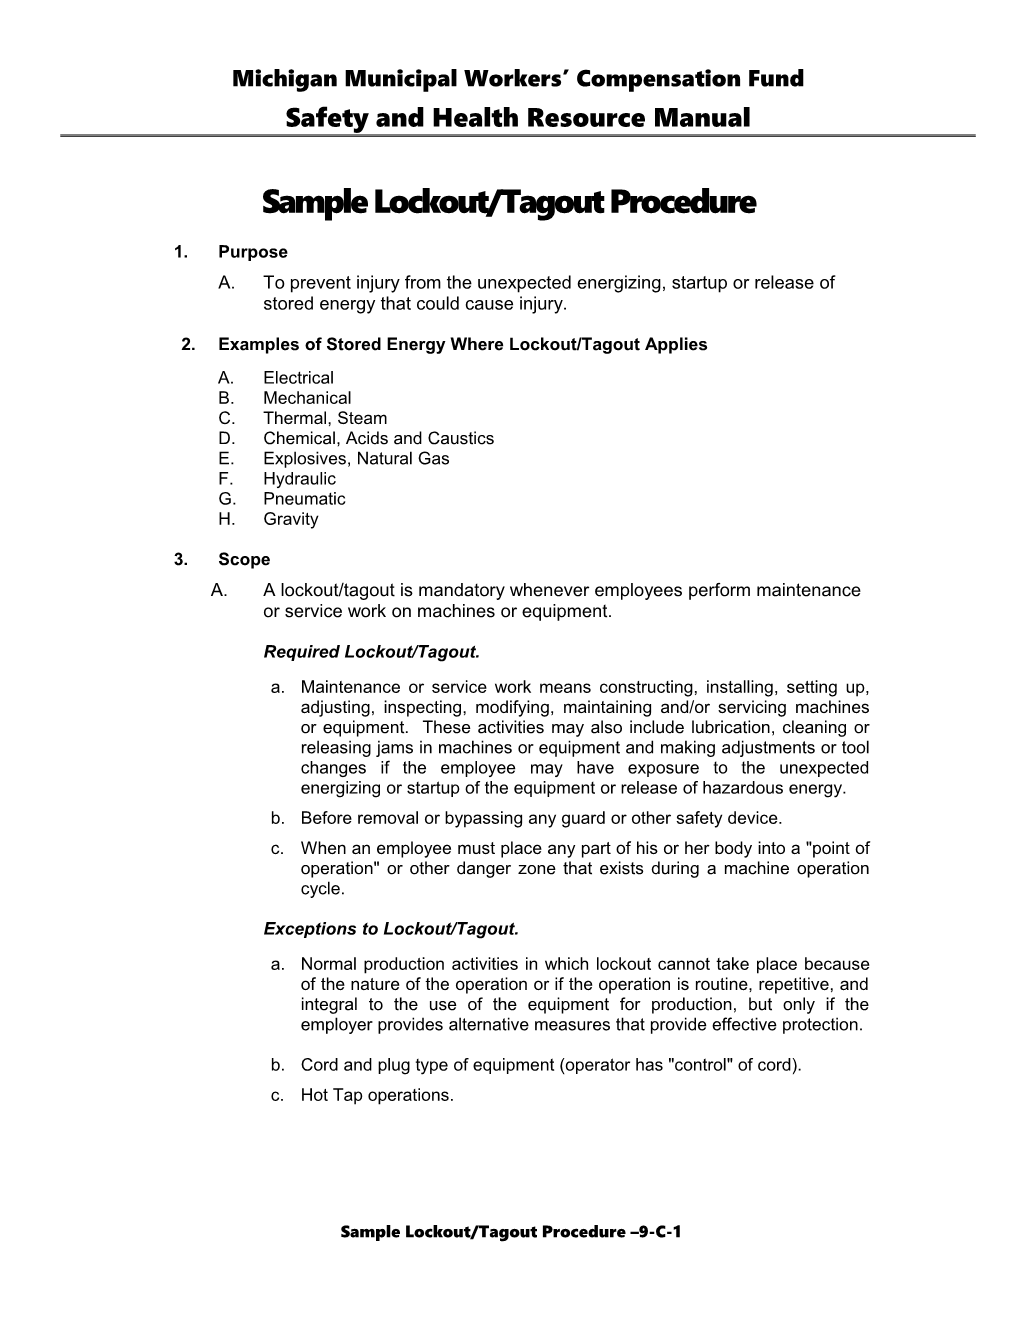 Sample Lockout/Tagout Procedure